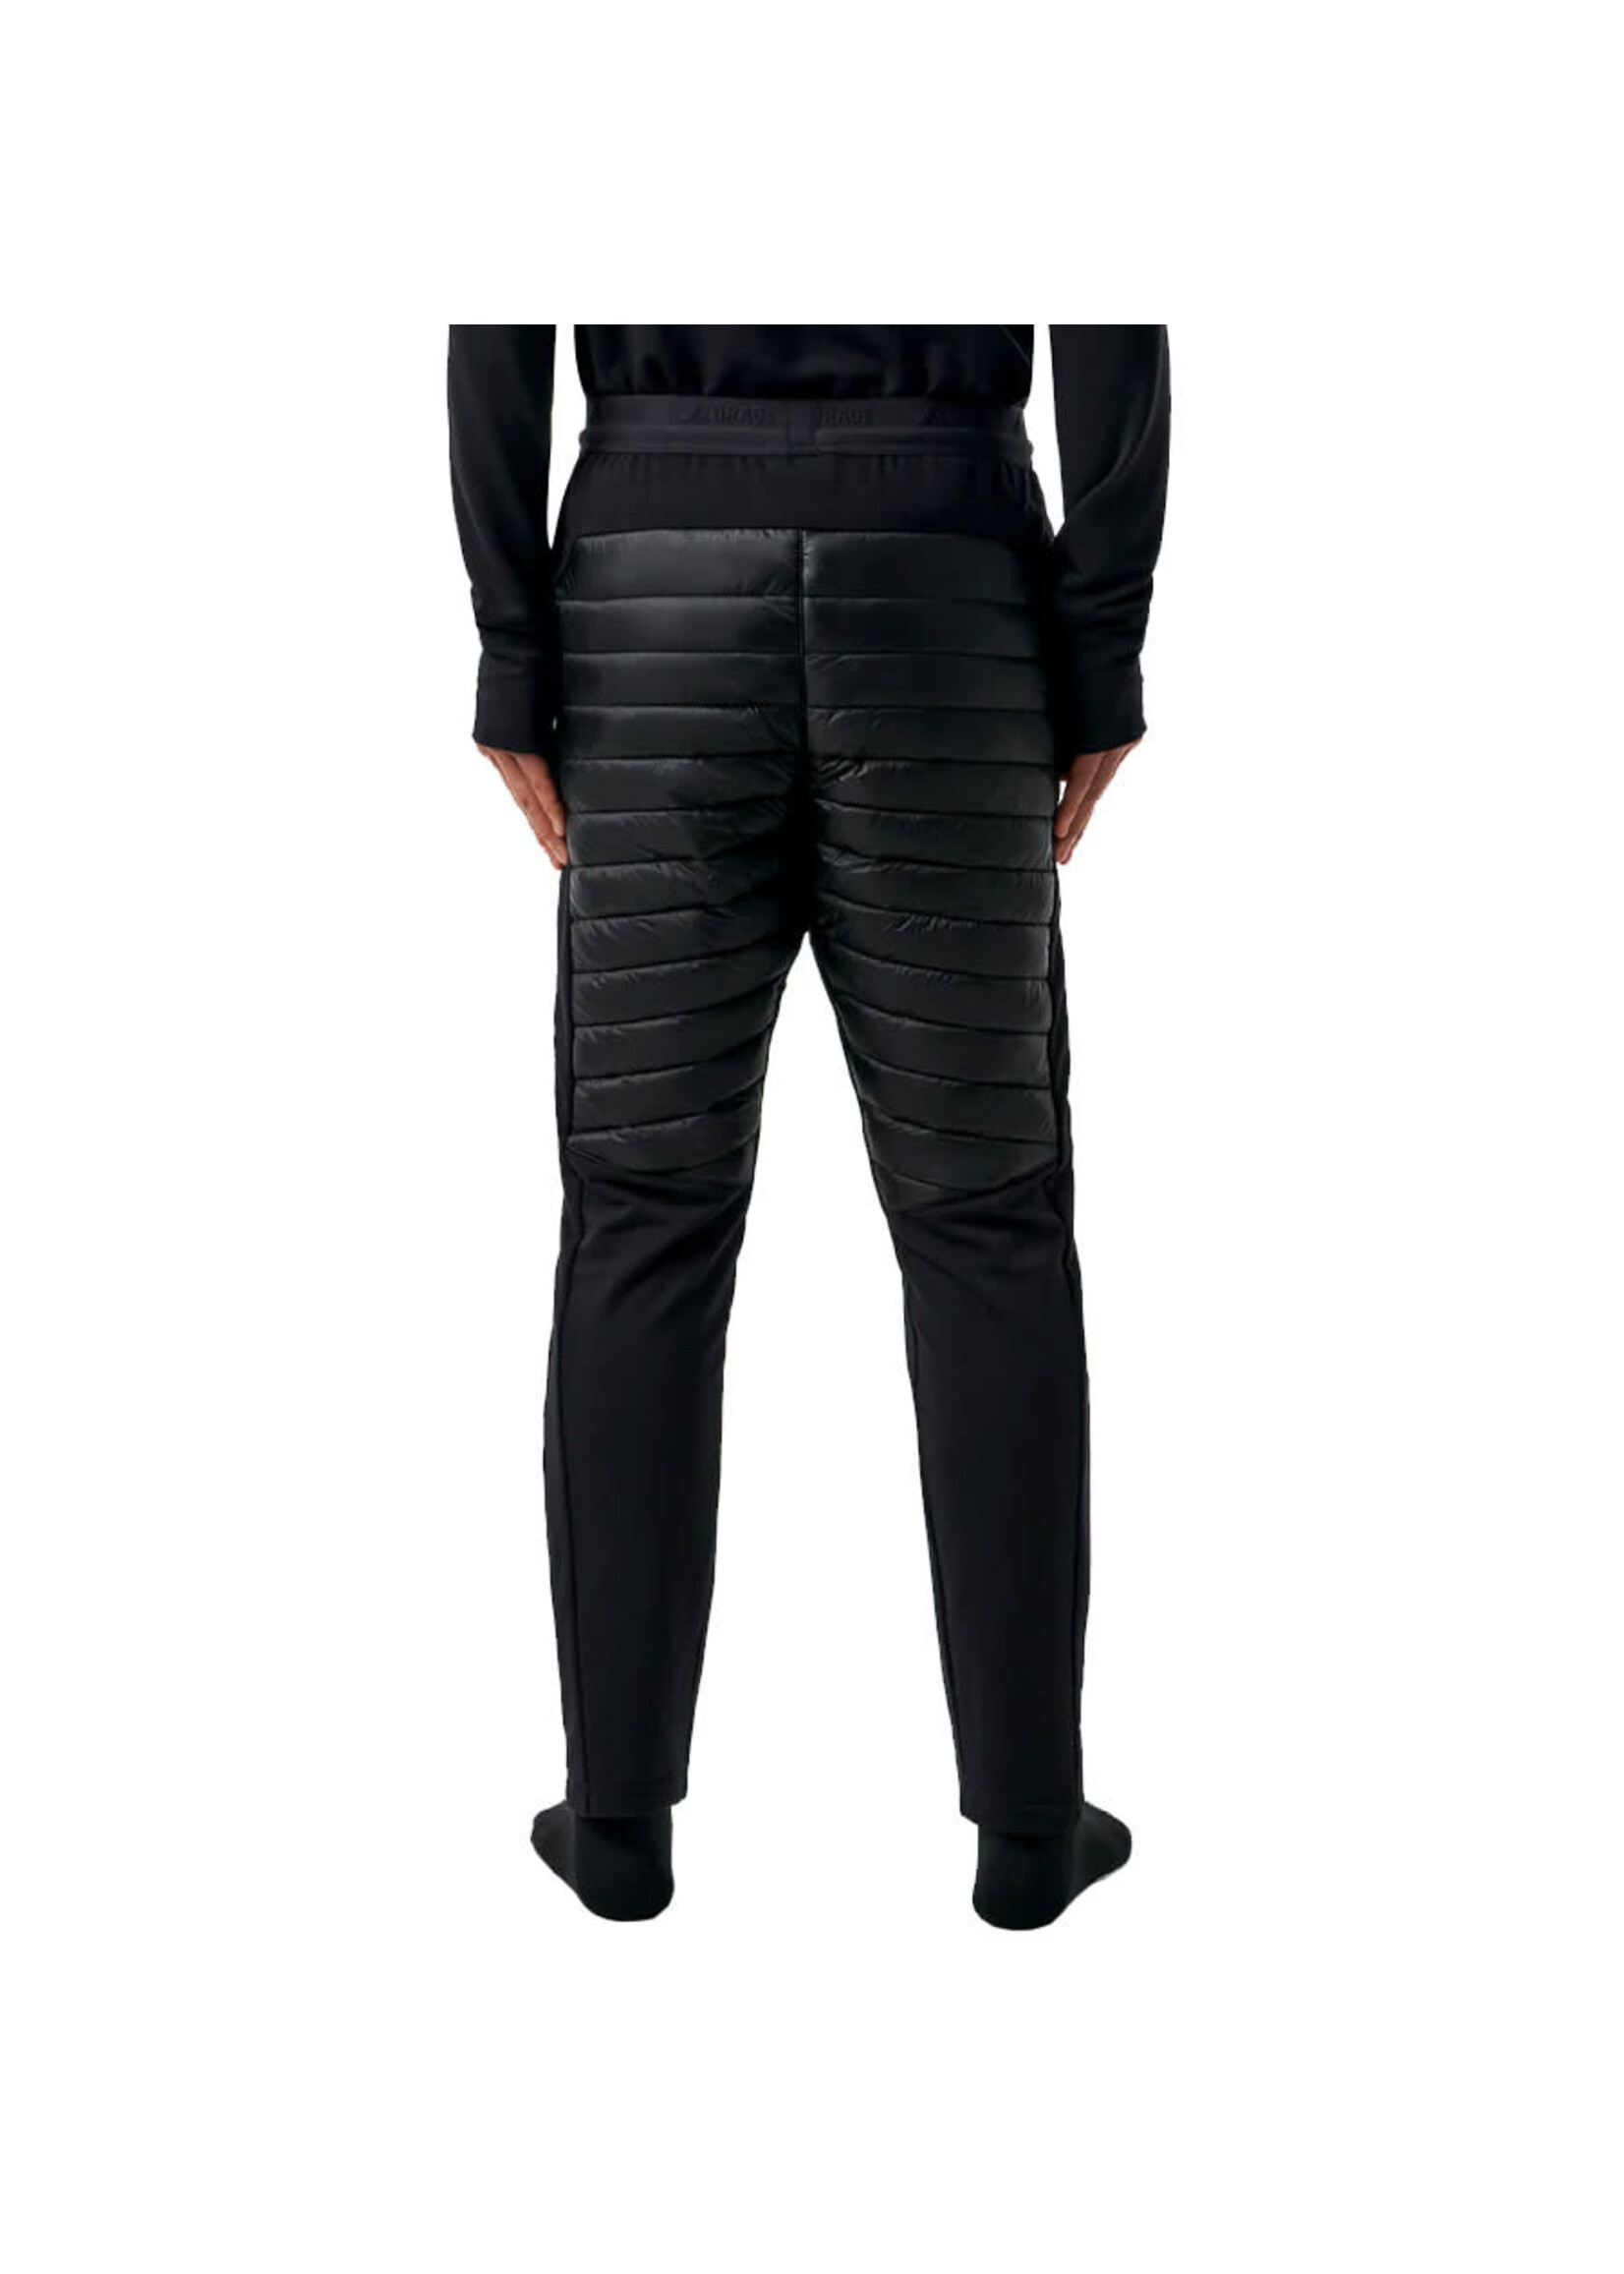 ORAGE Pantalon TUNDRA HYBRID / Noir (Homme)